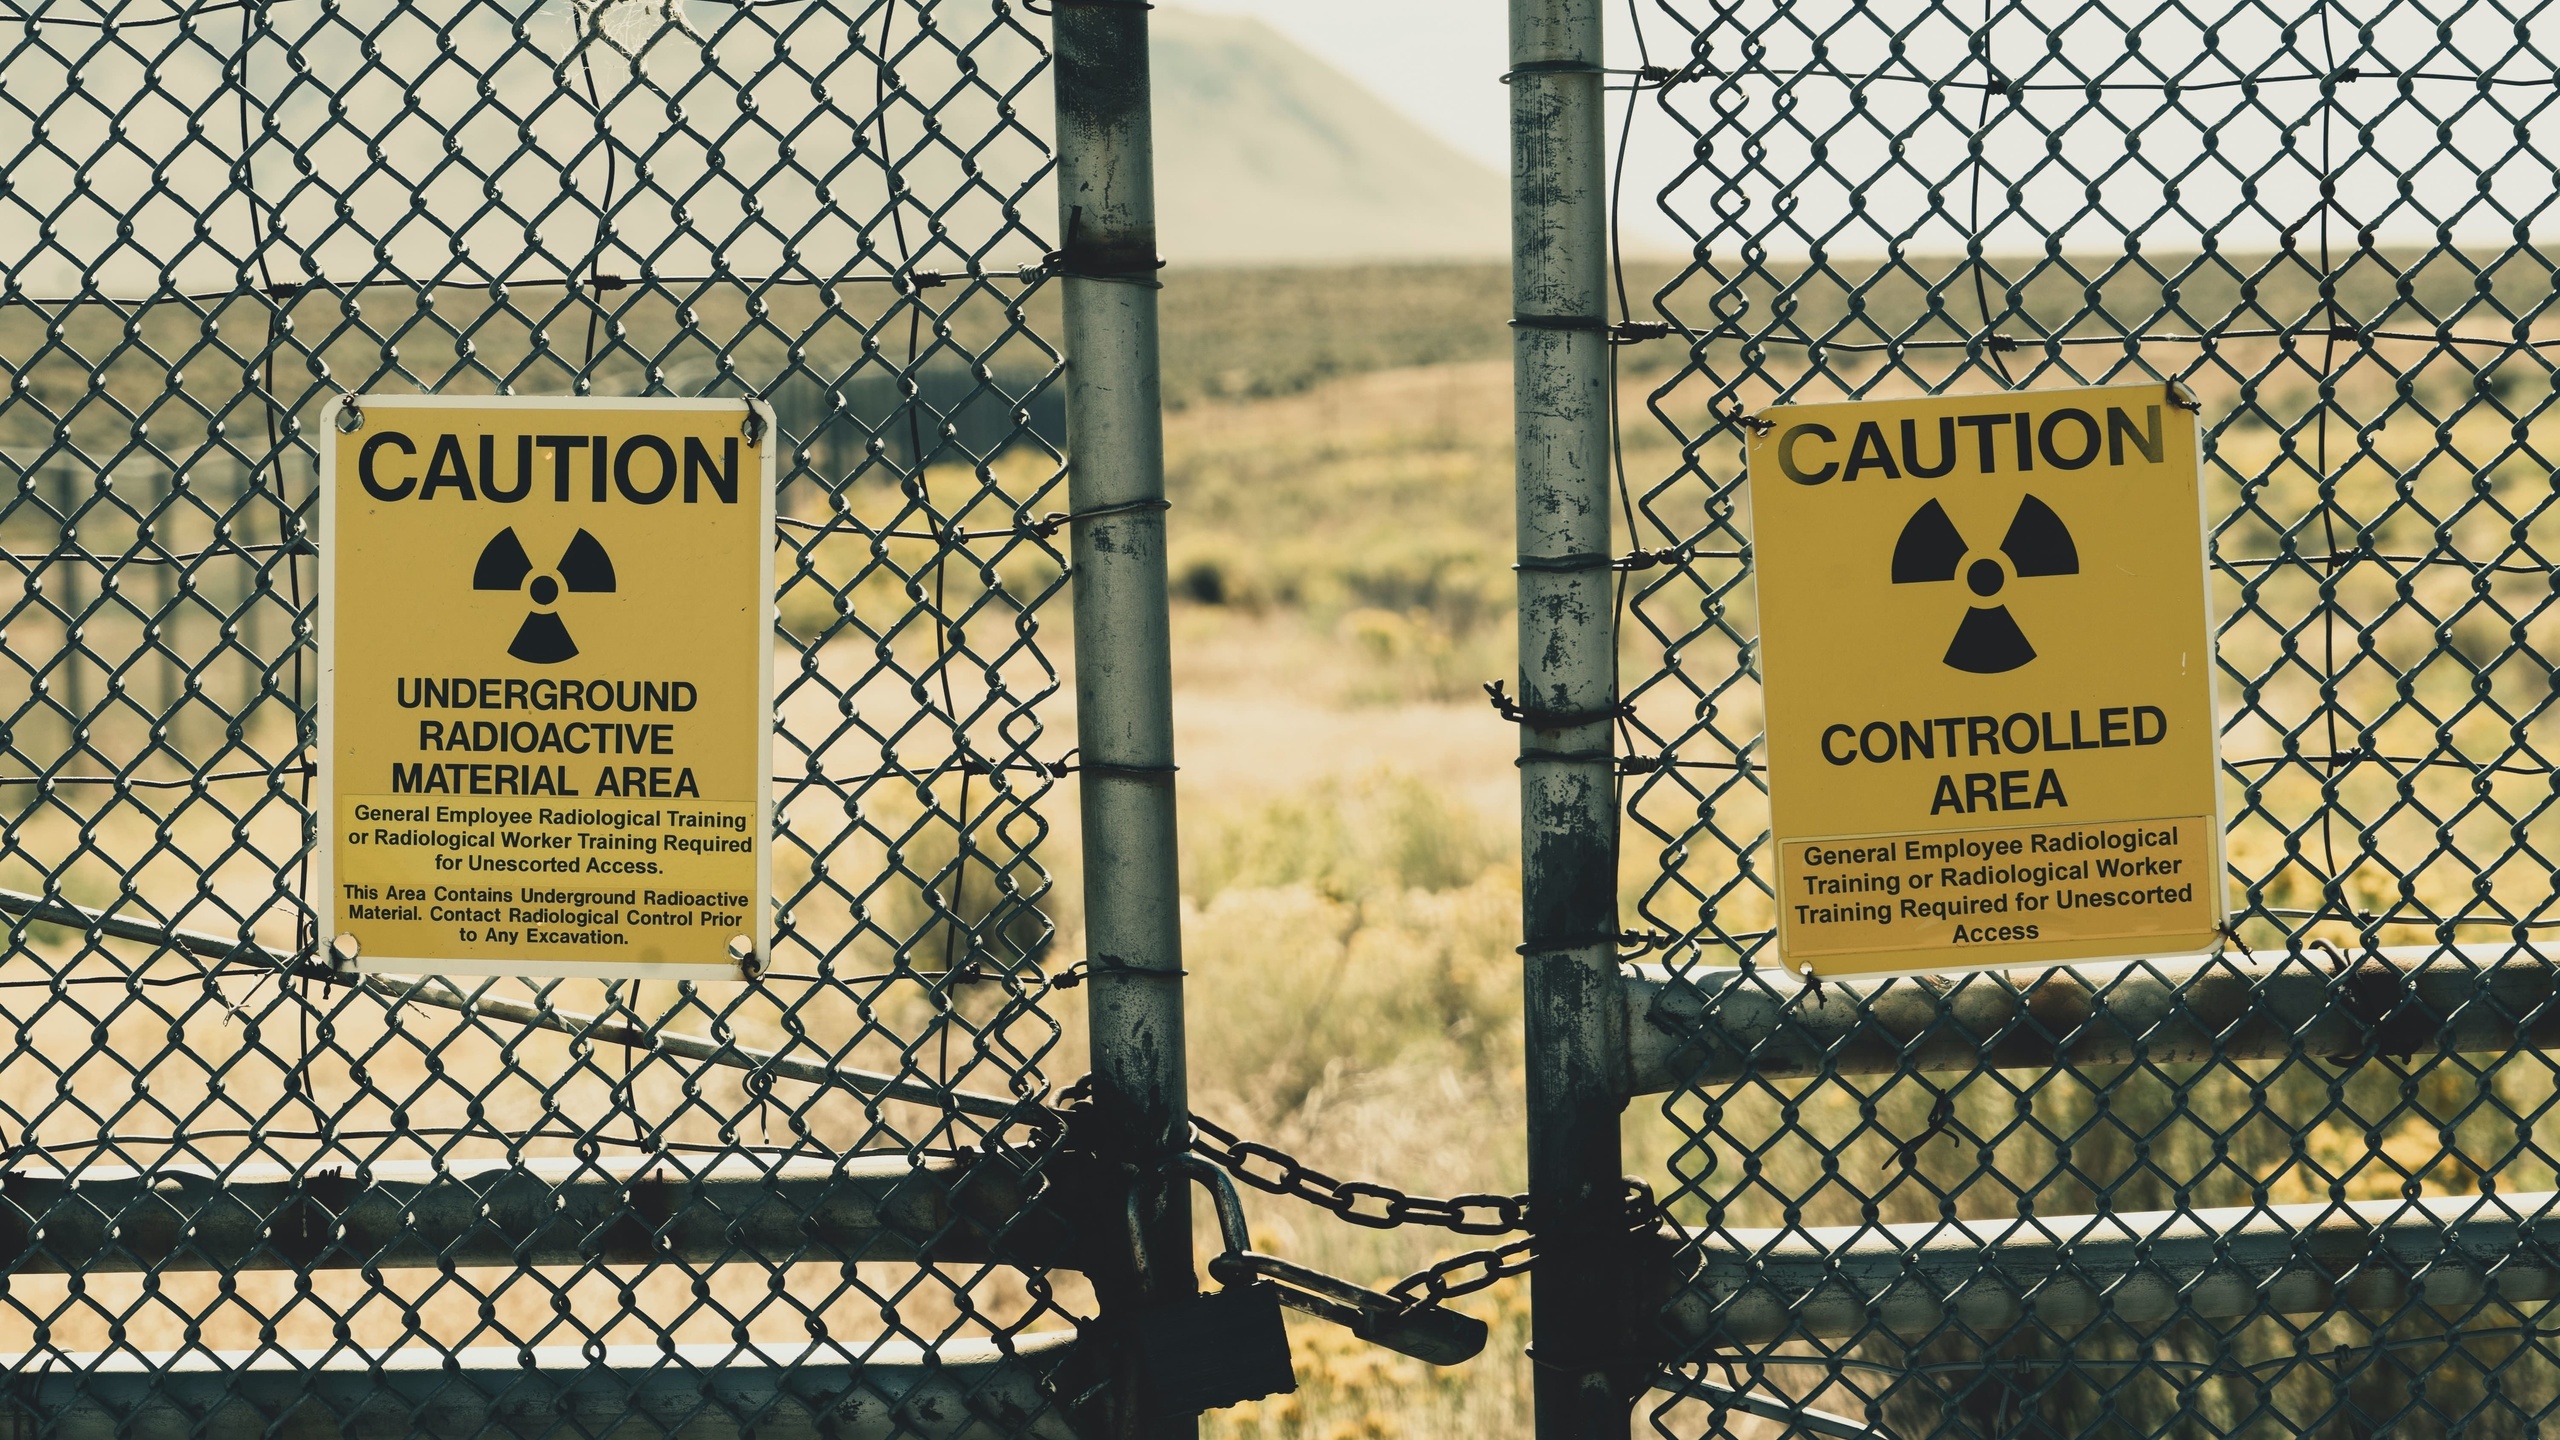 nuclear energy, radioactive waste, caution, idaho, fence, radiation warning signs